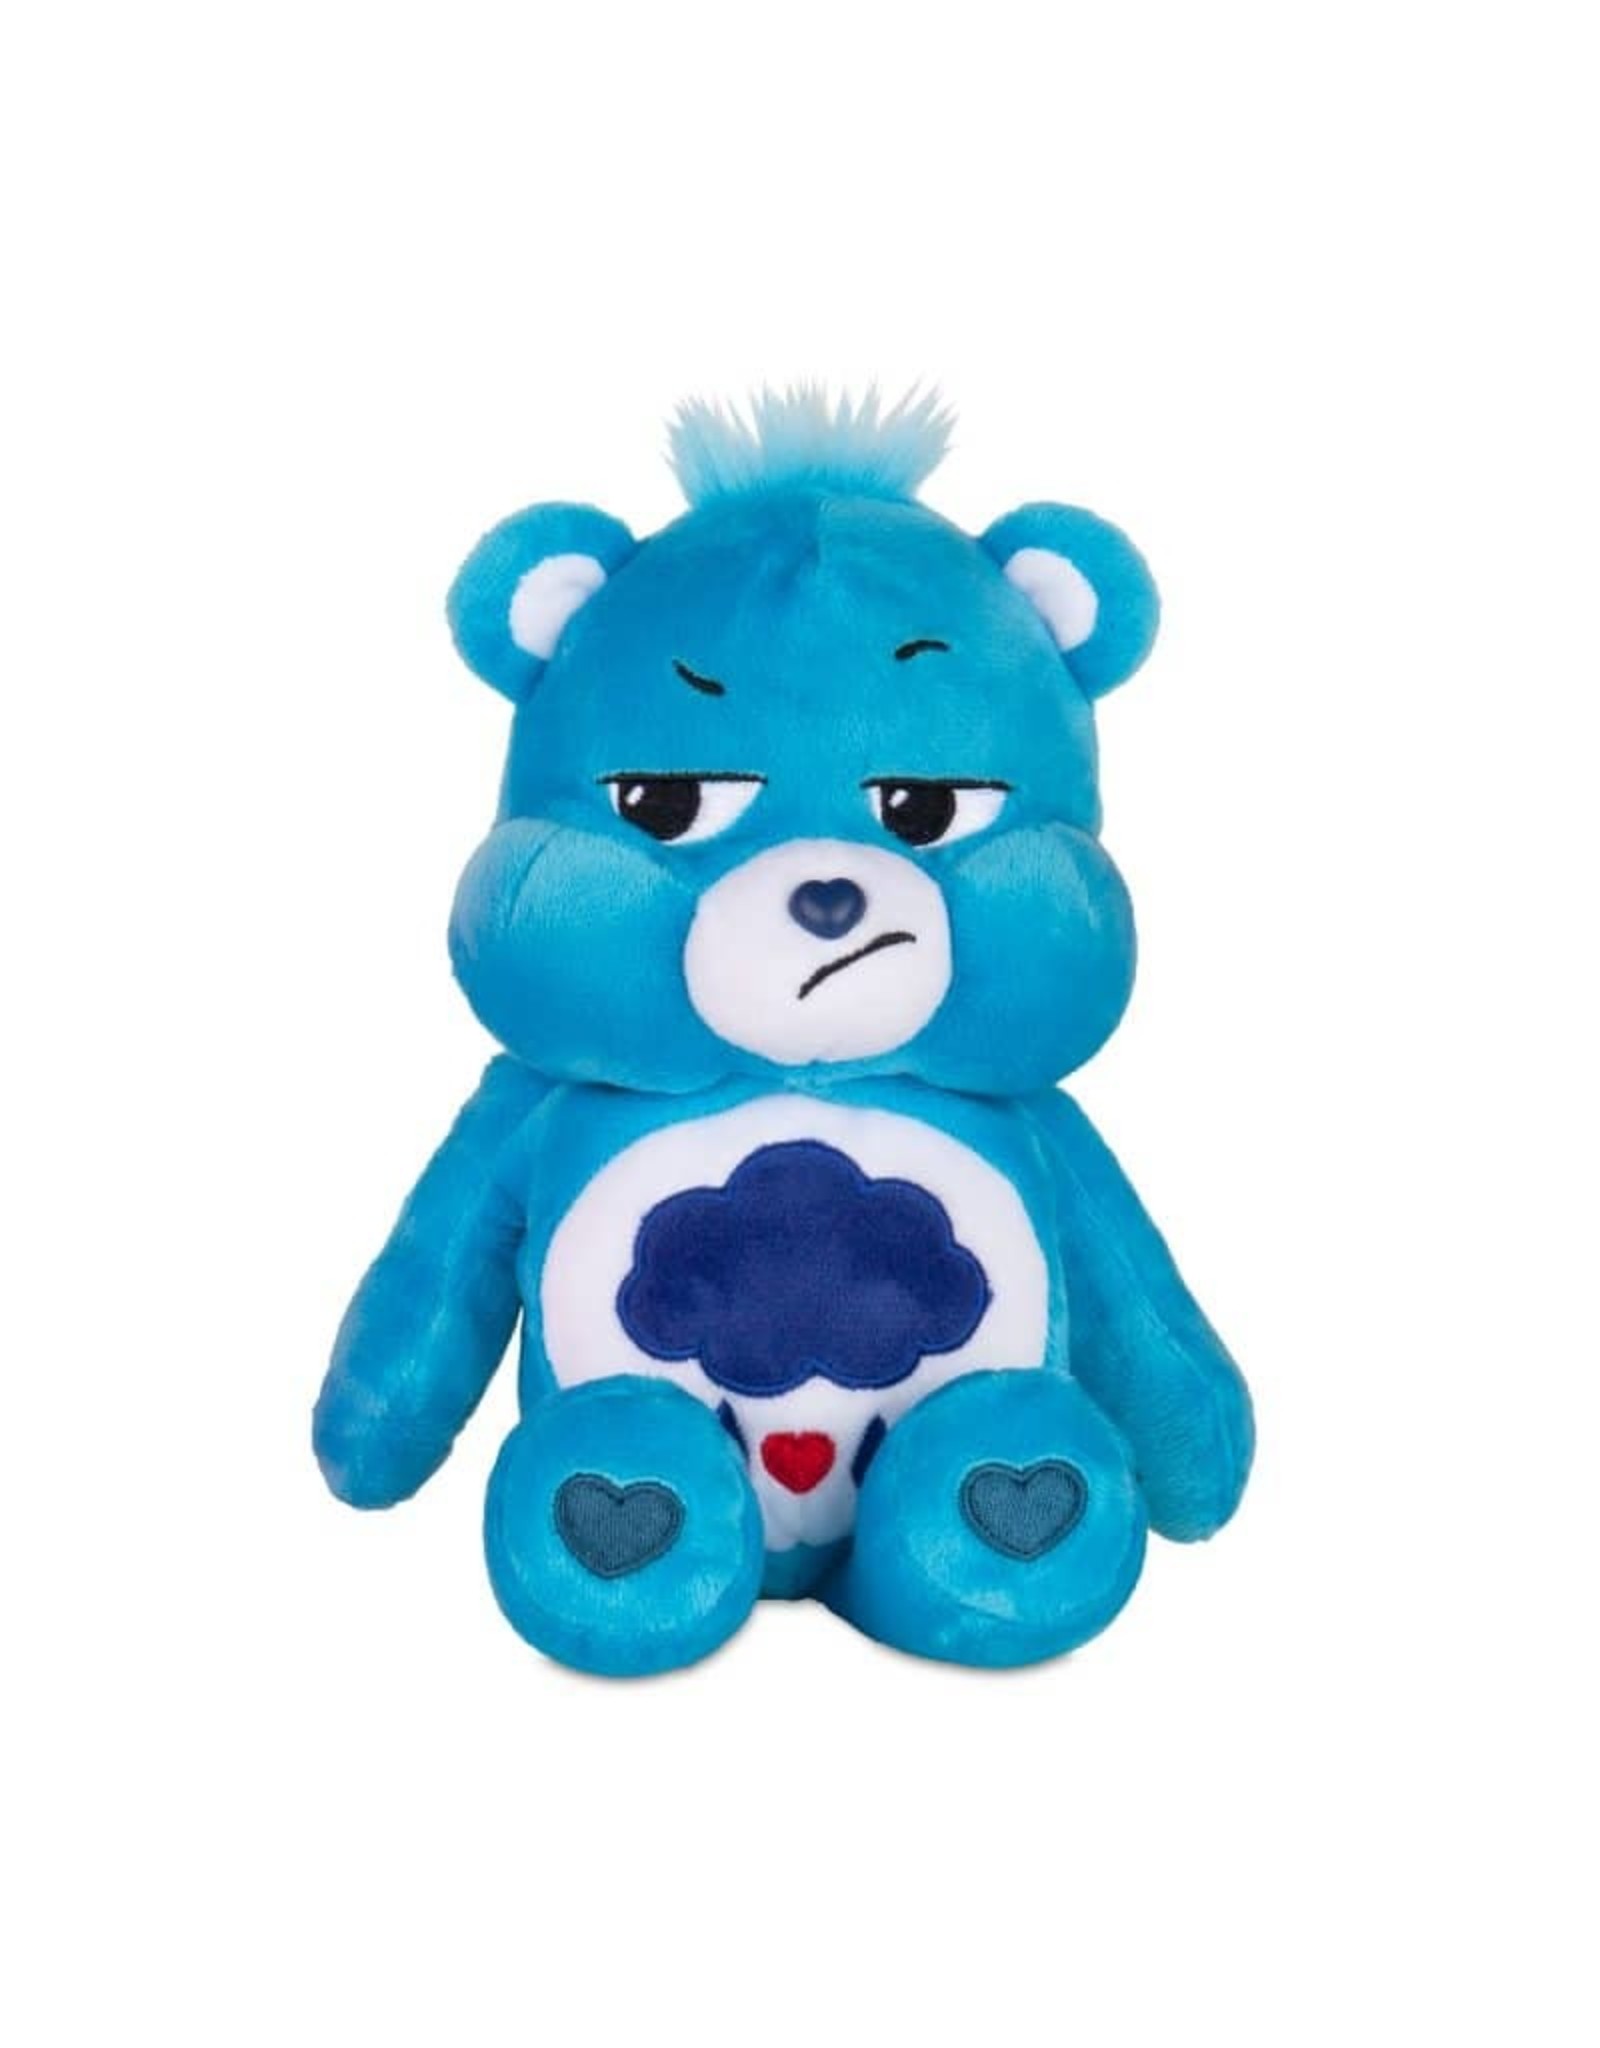 Care Bears - Grumpy Bear